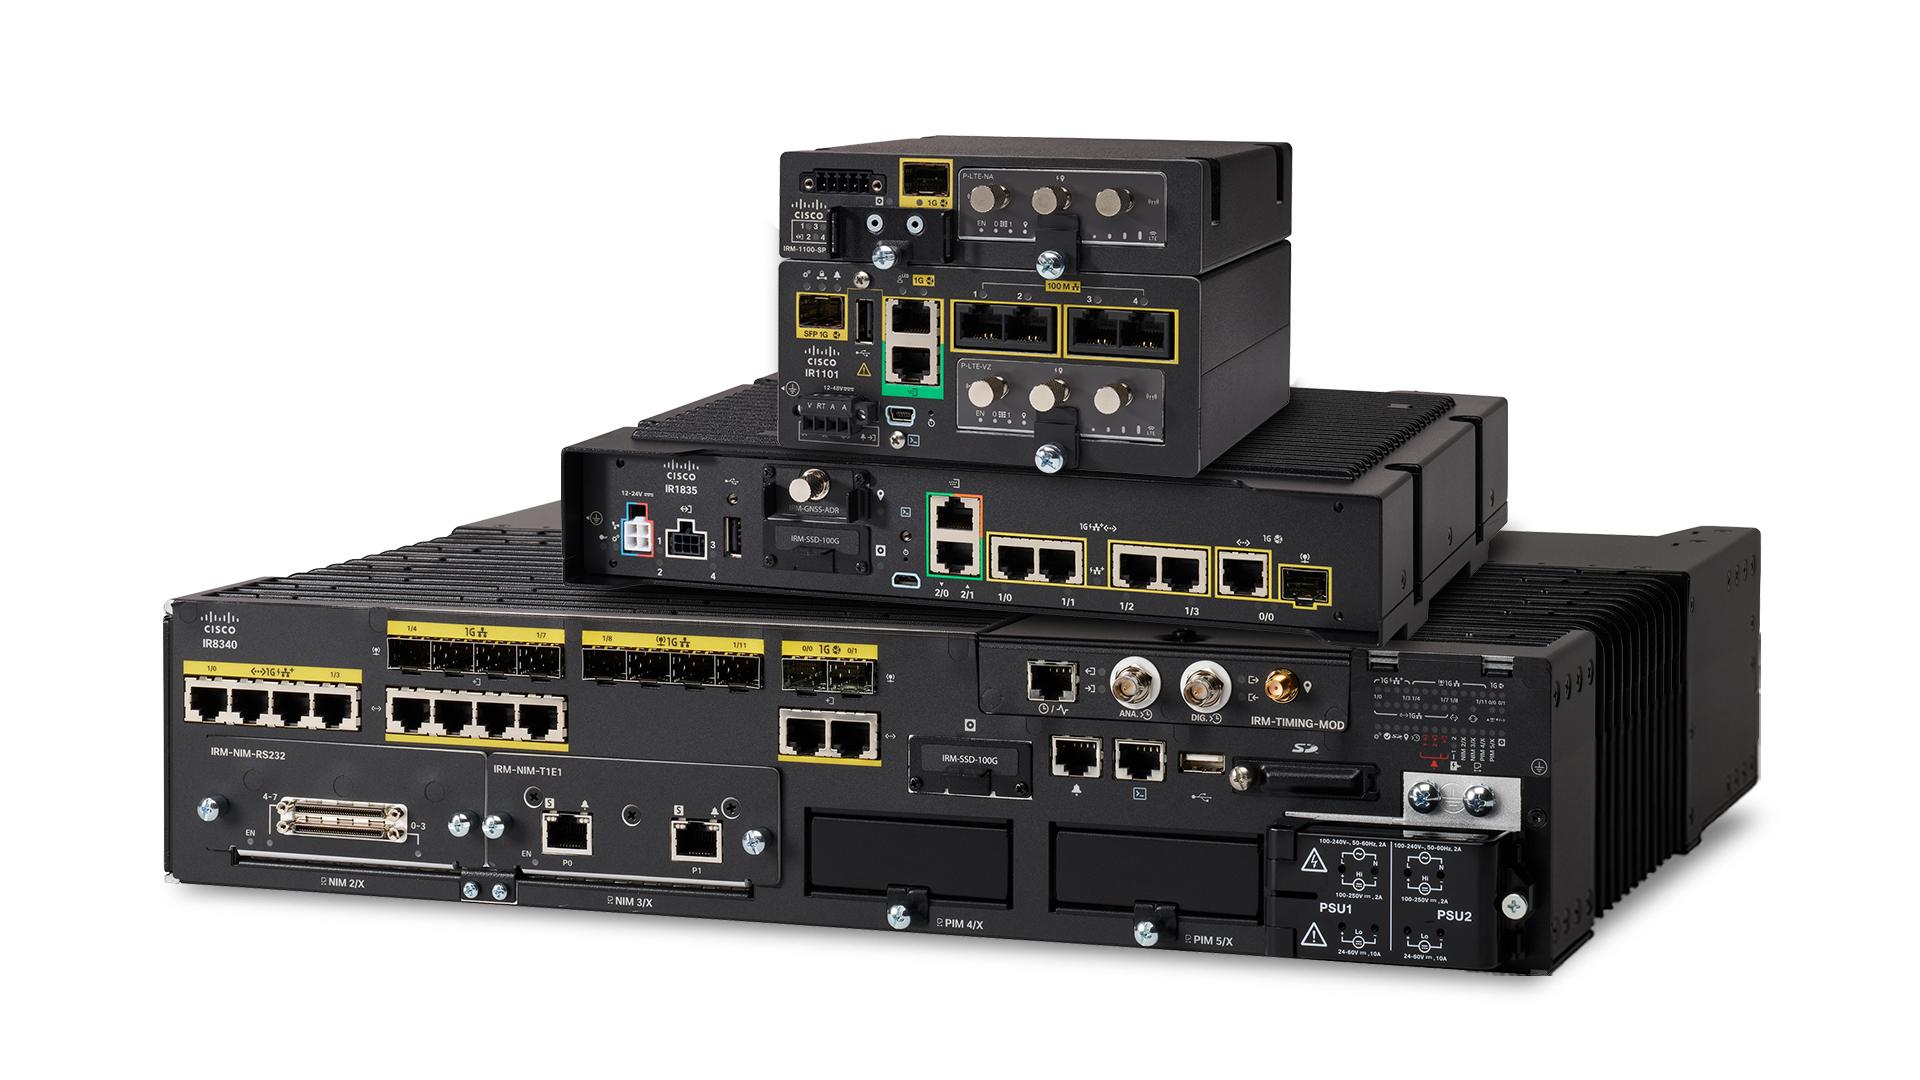 Cisco Catalyst IR8300 Rugged Series Router